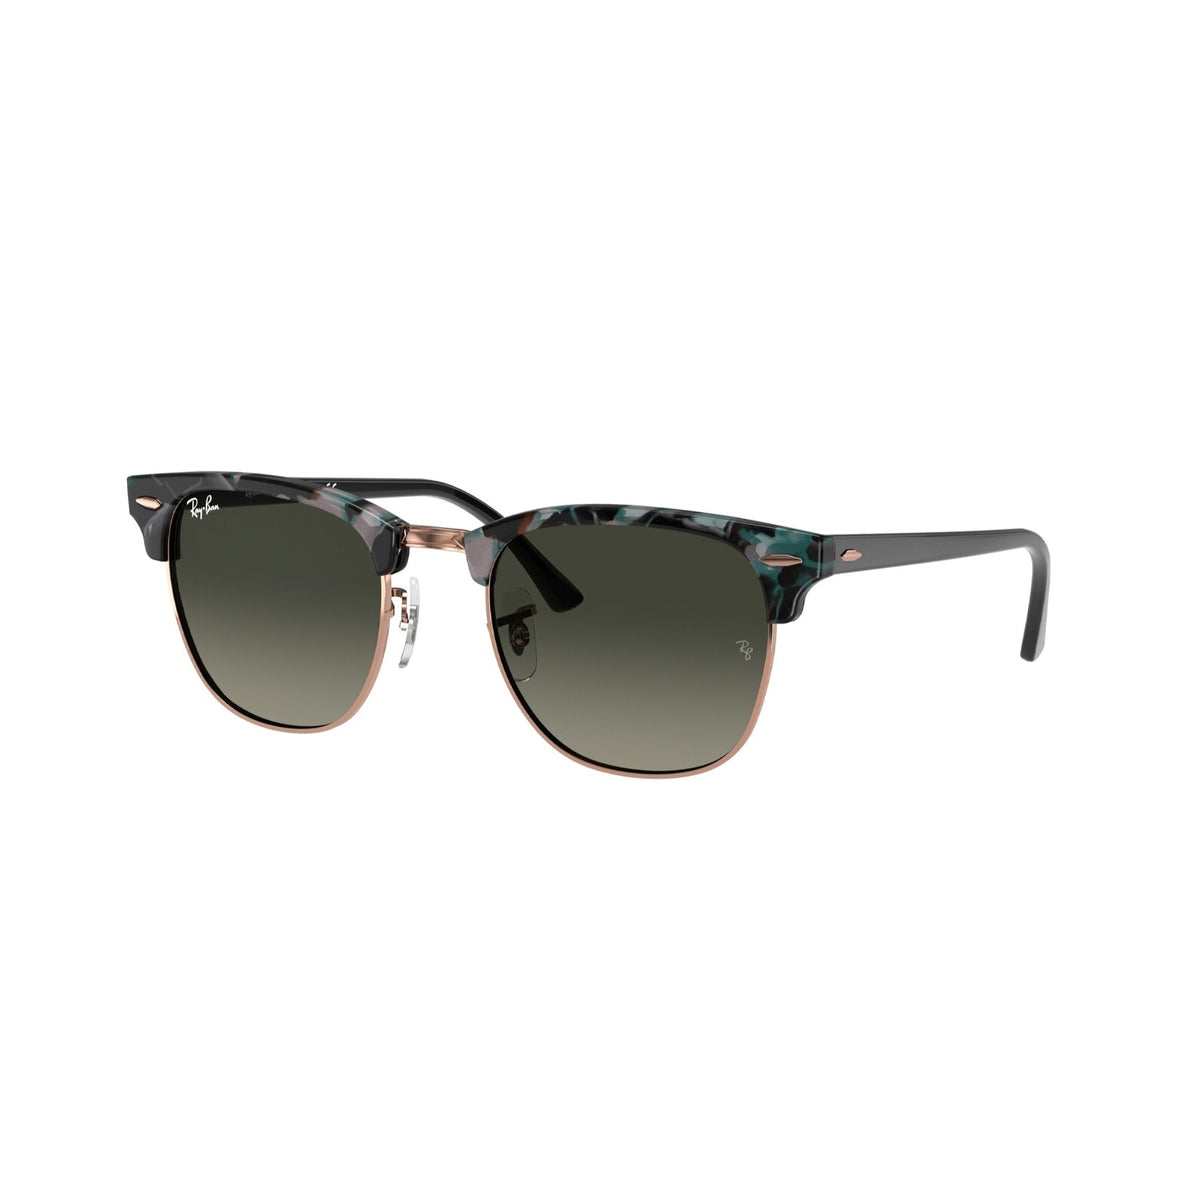 Ray-Ban Unisex Sunglasses Clubmaster Havana Light Grey Gradient Dark Grey Plastic Plastic  0RB3016 125571 51